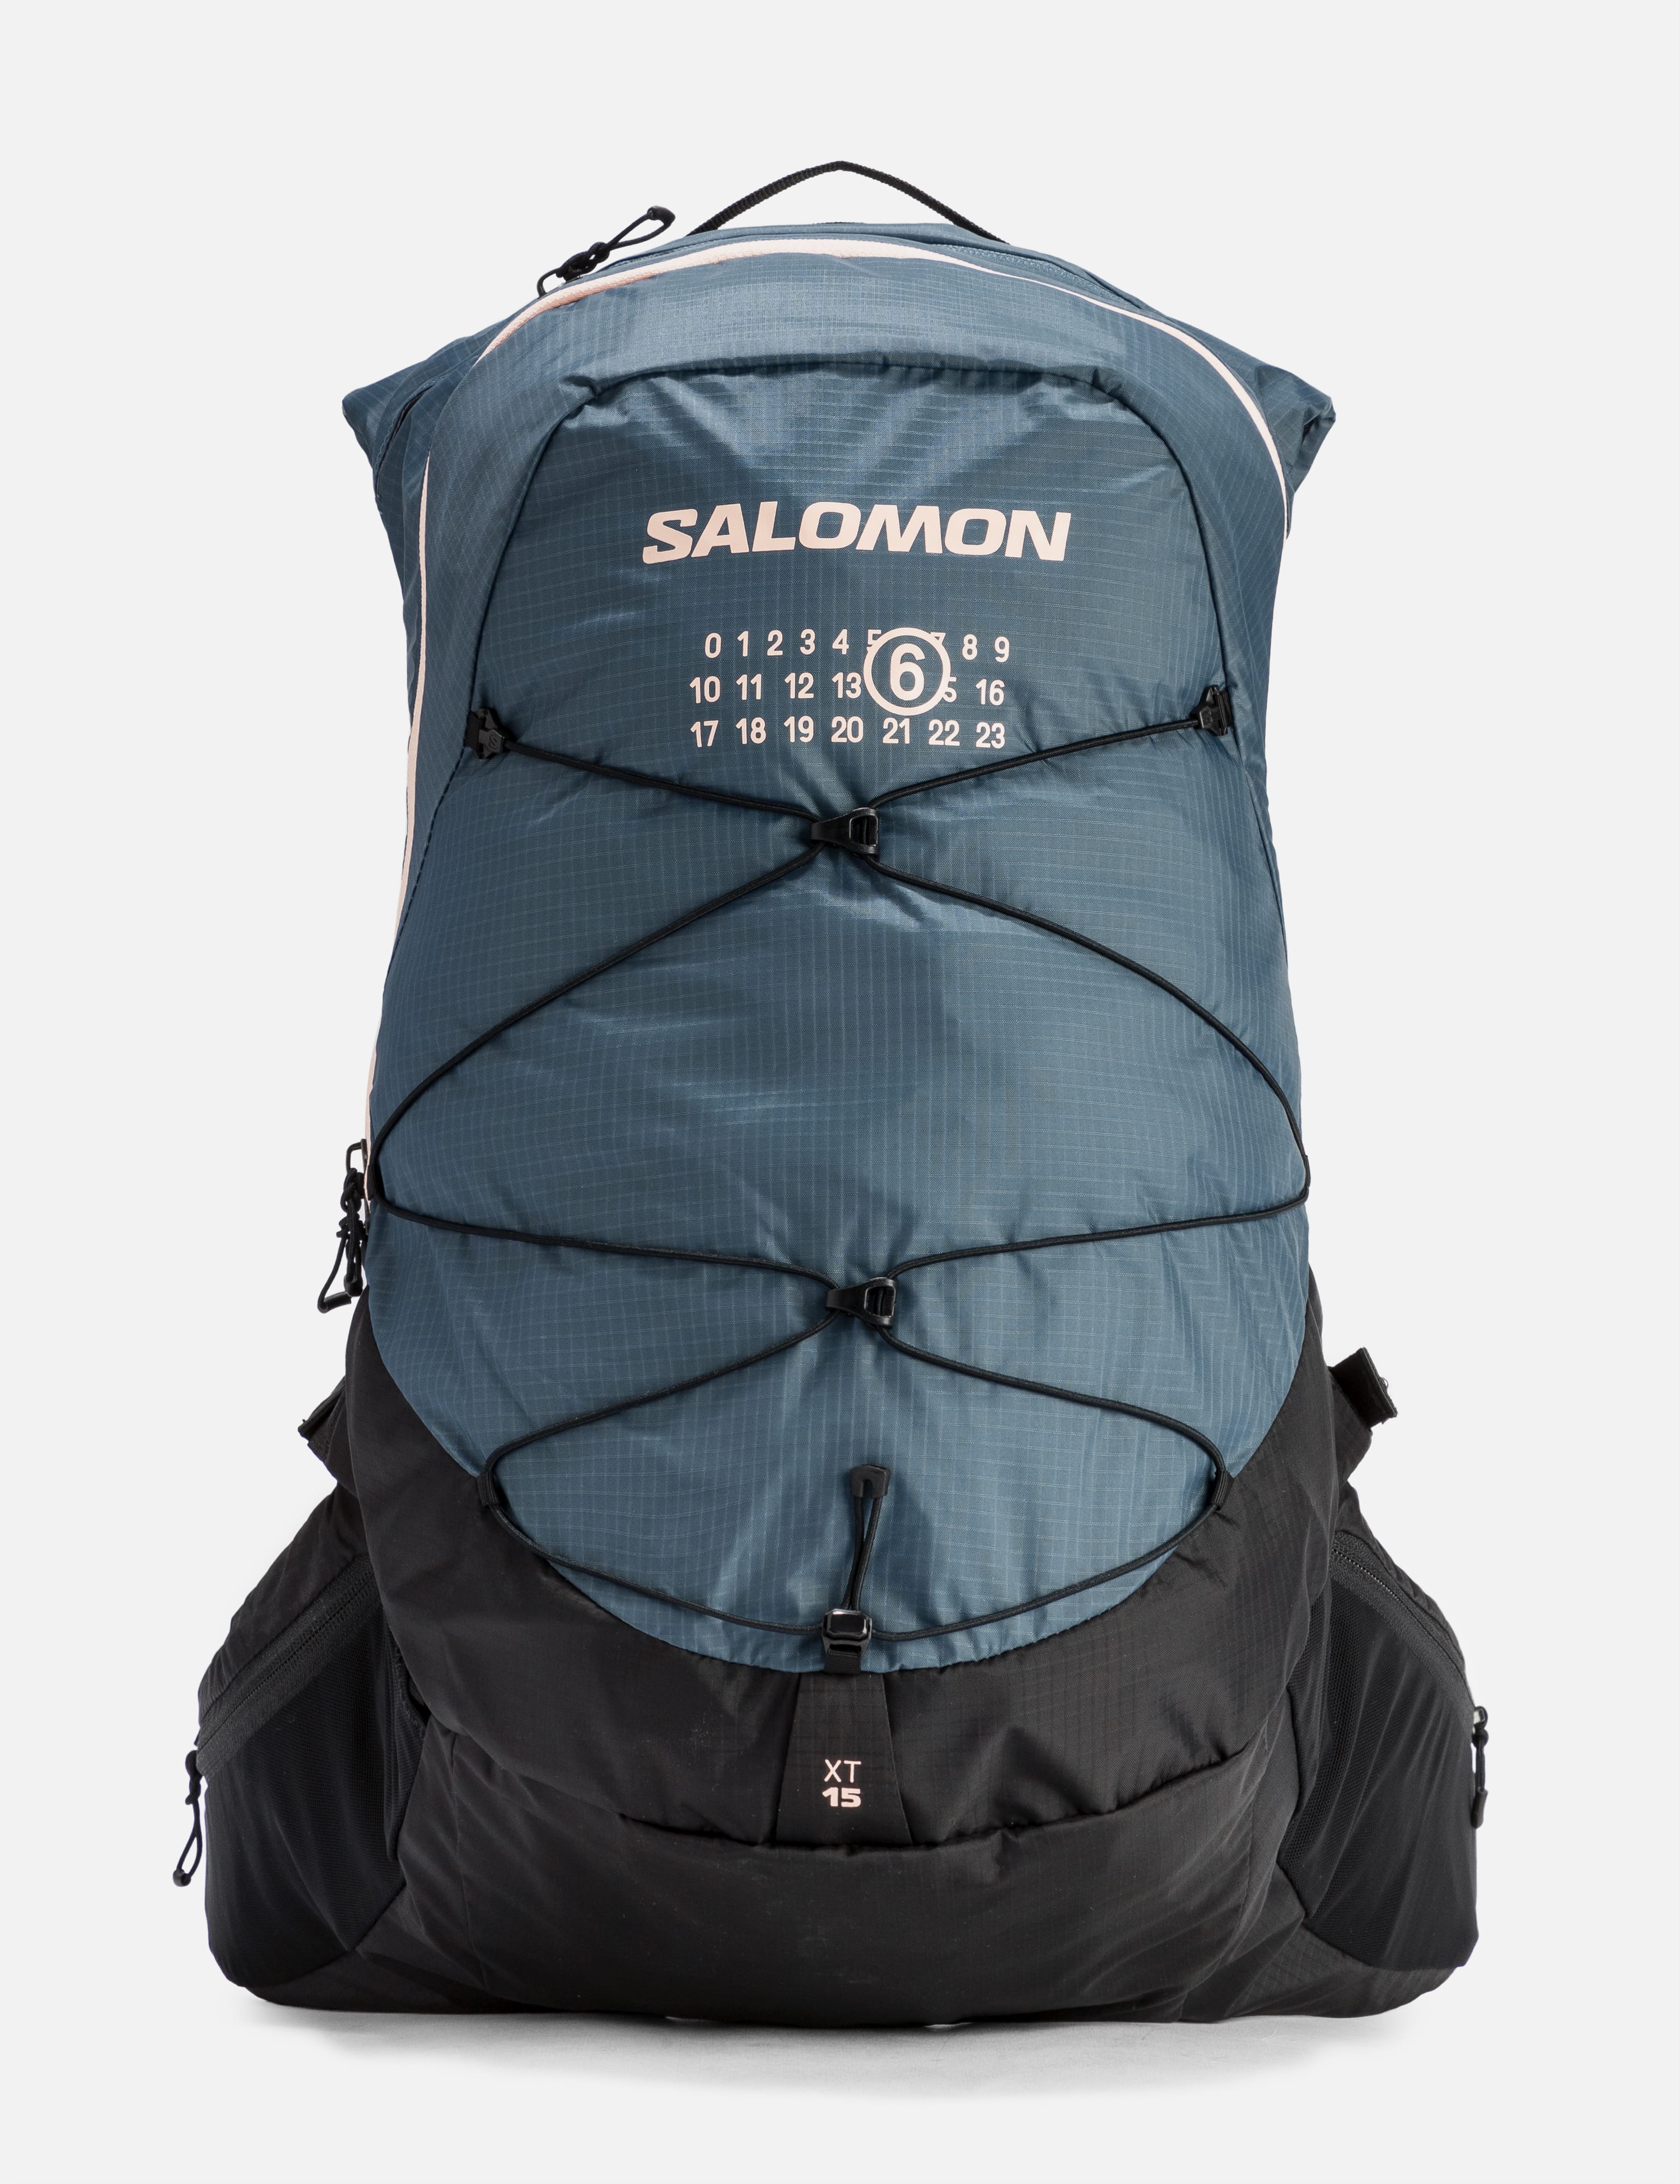 MM6 Maison Margiela - MM6 x Salomon XT 15 Backpack | HBX